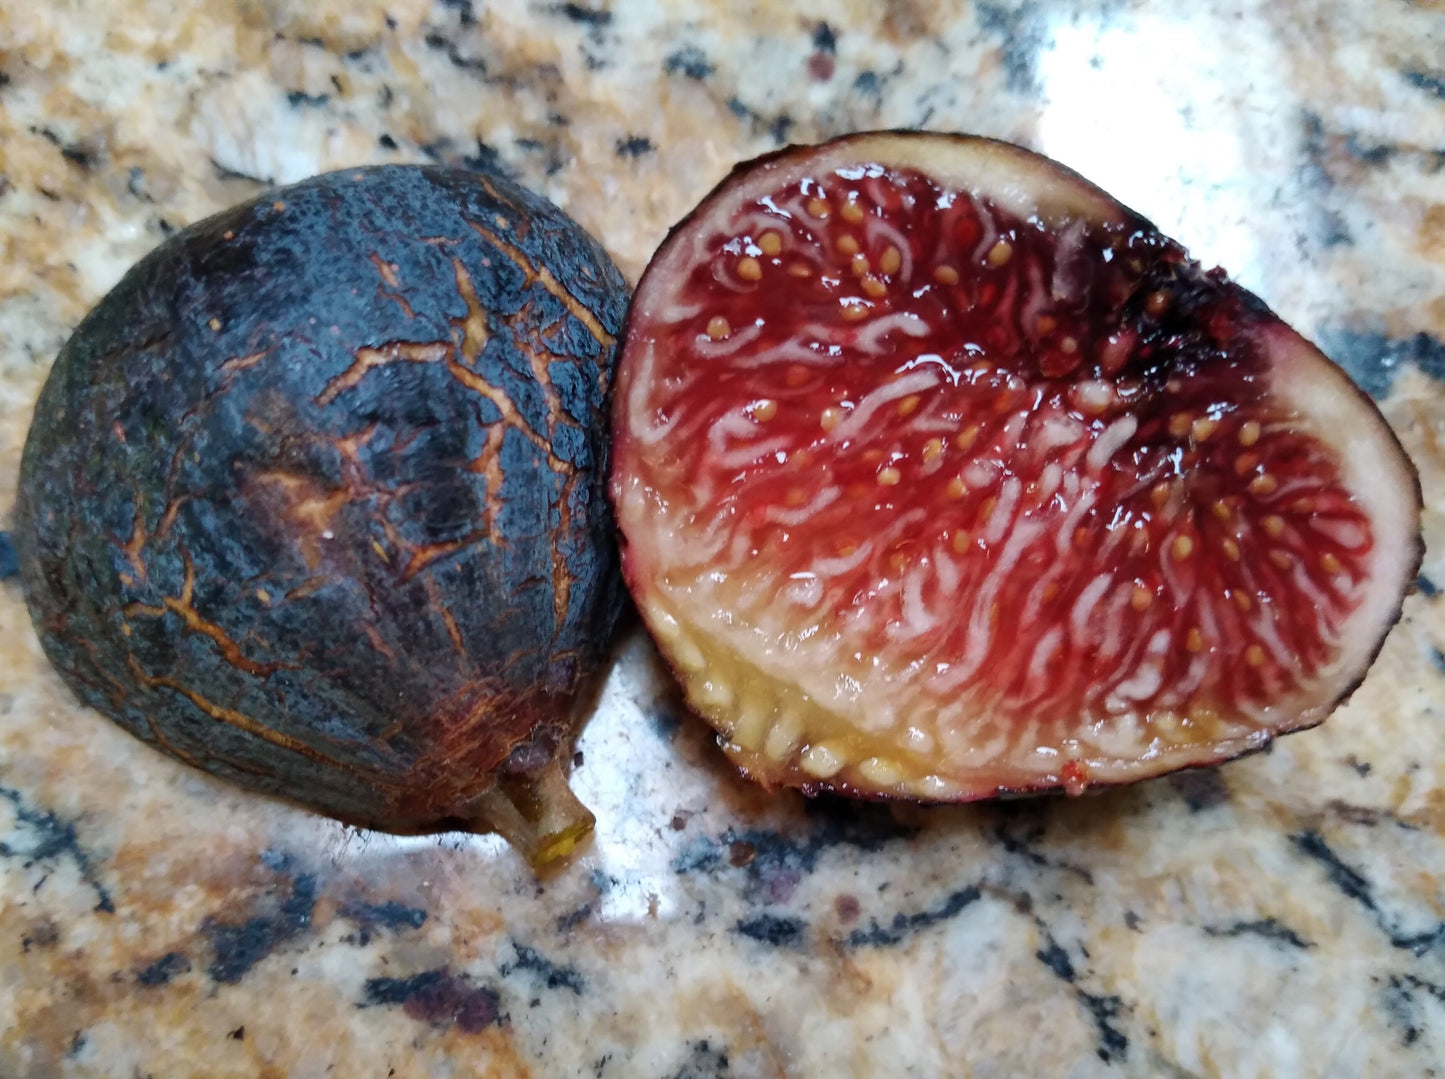 Black Manzanita Fig Tree - 2 Cuttings - Rich Berry Flavor